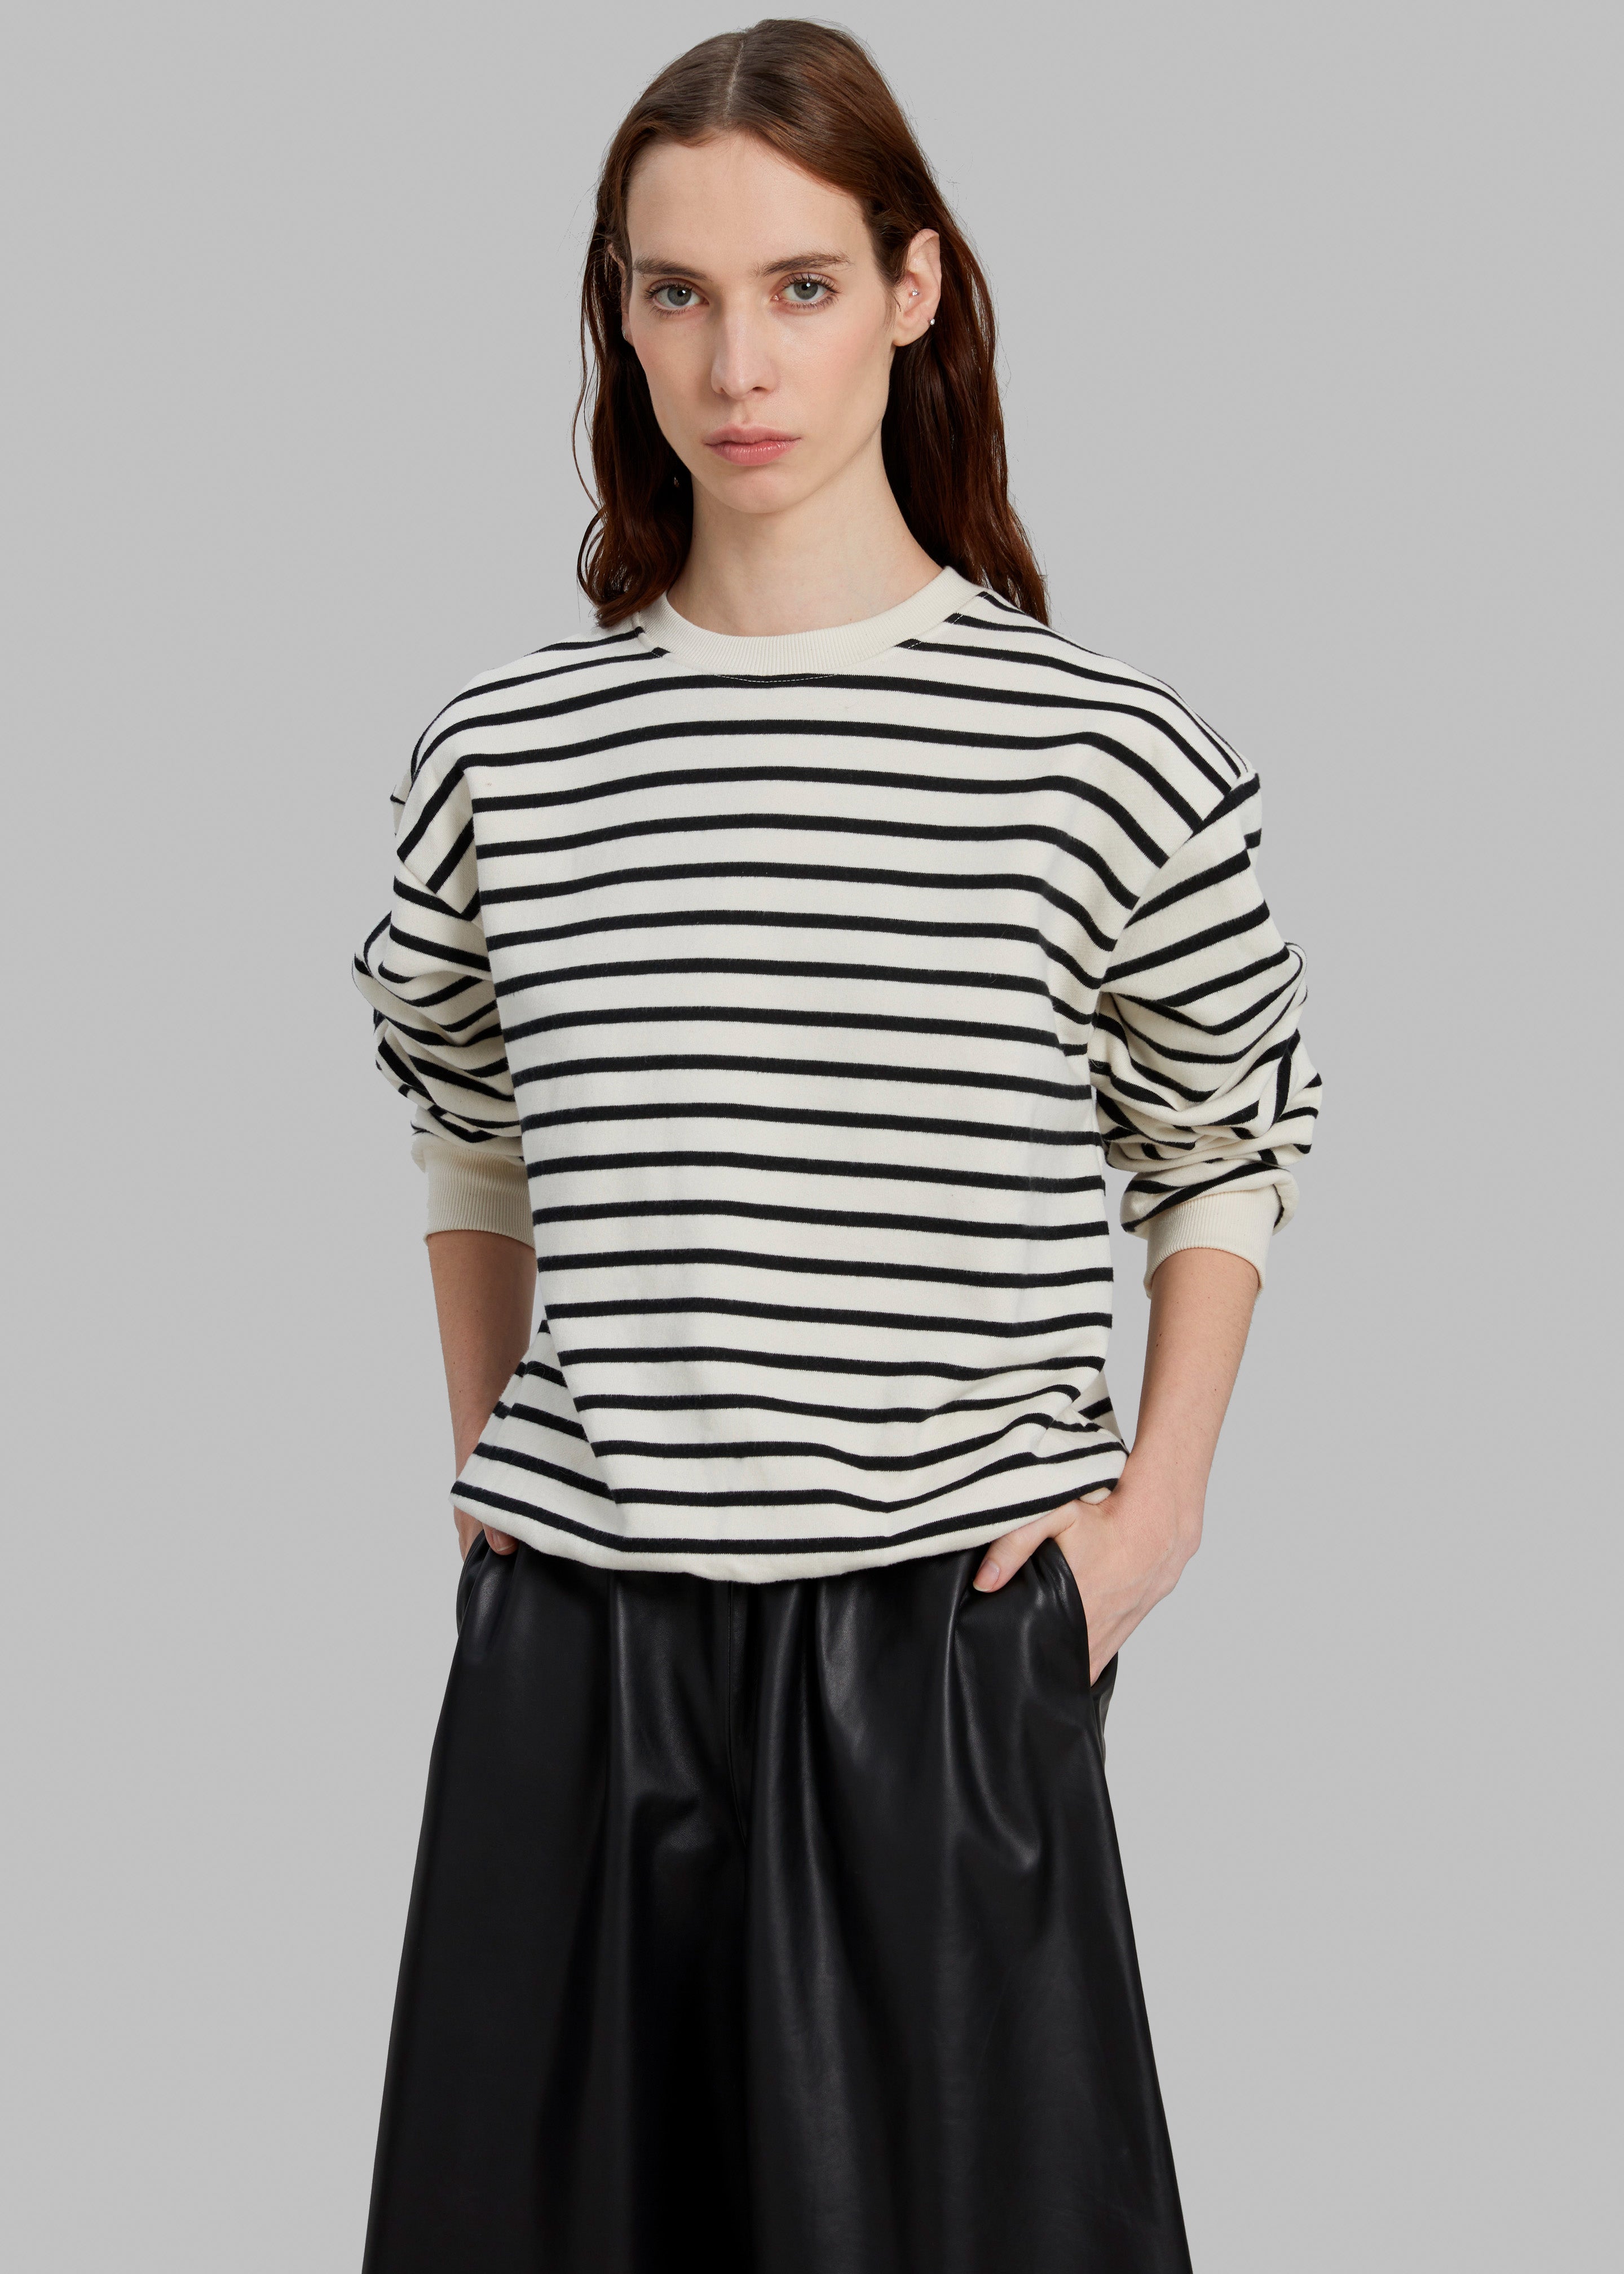 Saint Stripe Sweater - Black/White Stripe - 5